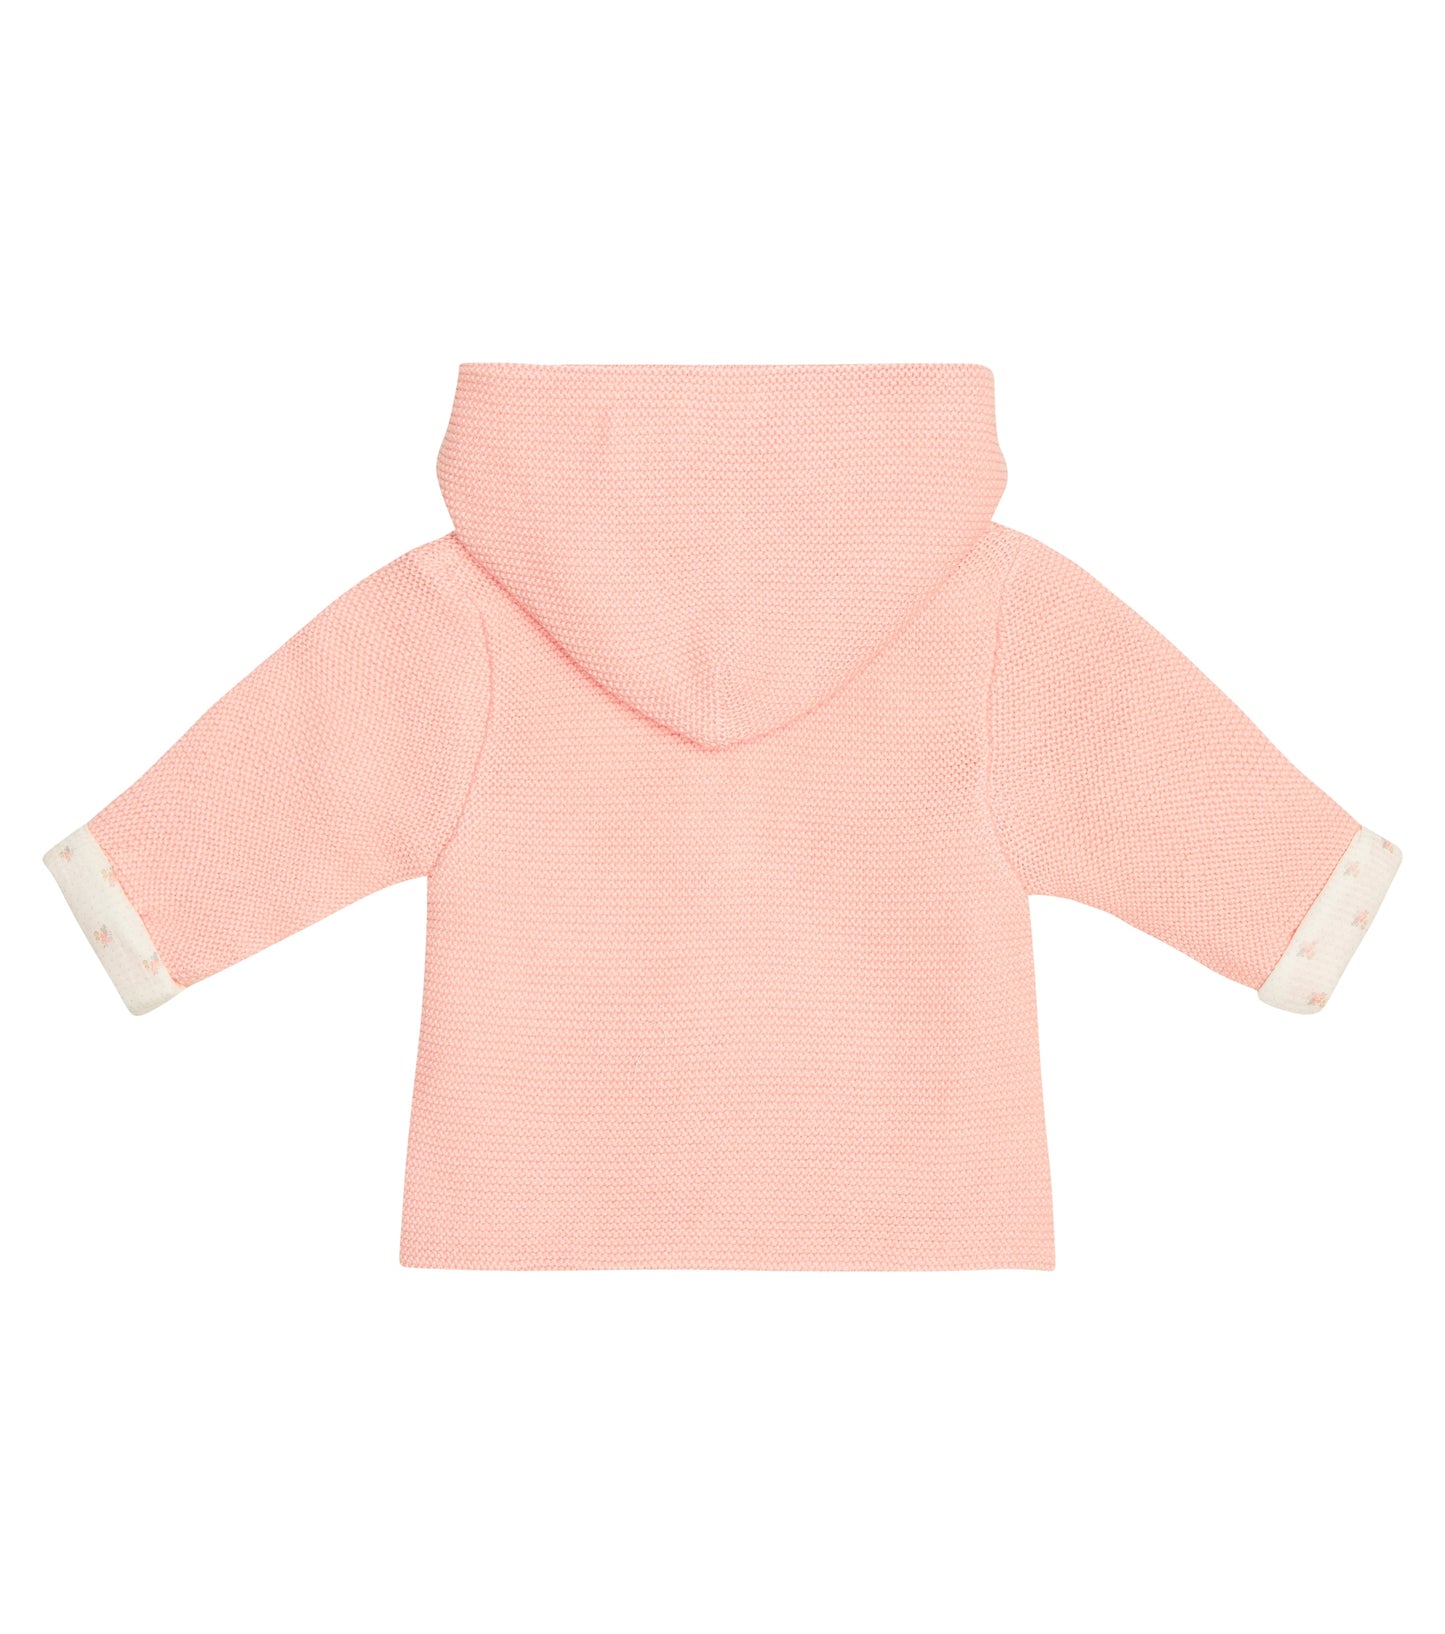 Xhakete roze pambuku per femije/Baby Cotton jacket-Tartine et chocolat